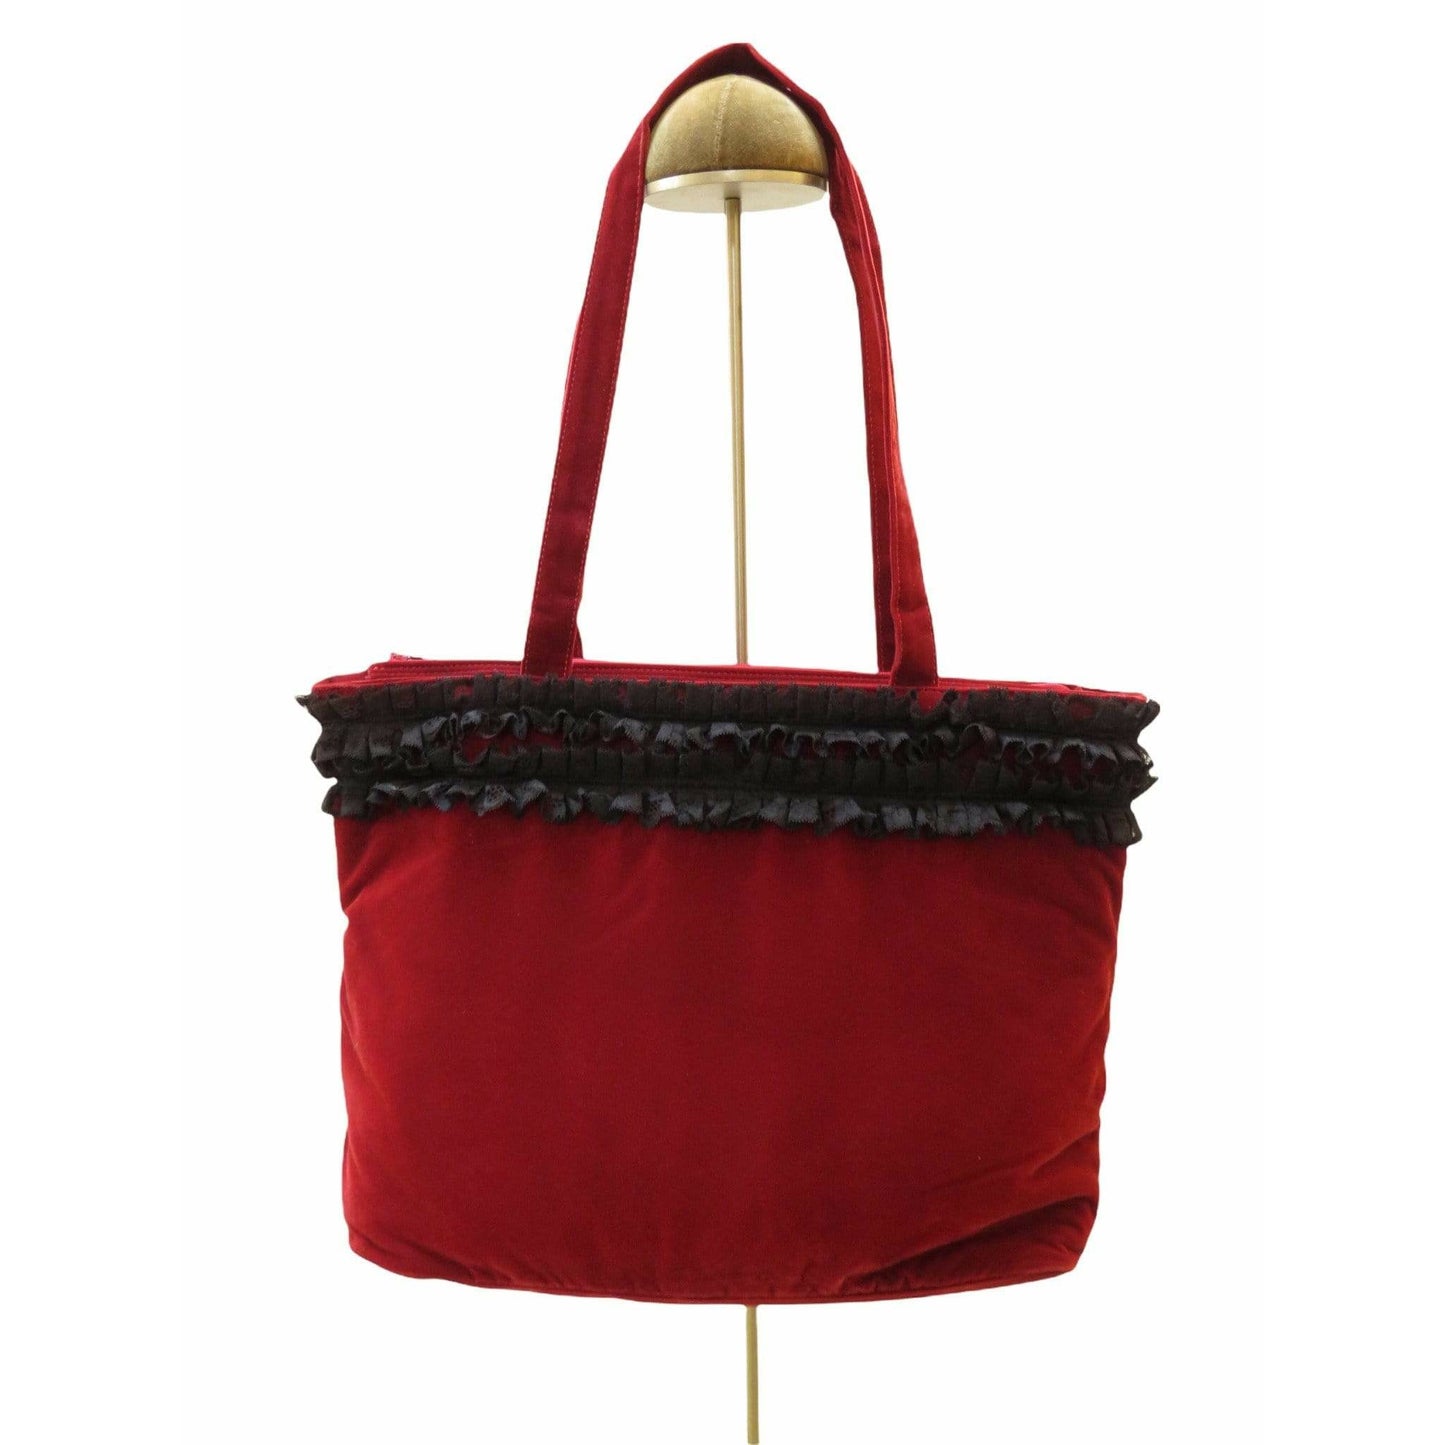 chantal-thomass-red-velvet-and-lace-shoulder-bag Handbags Dark Red